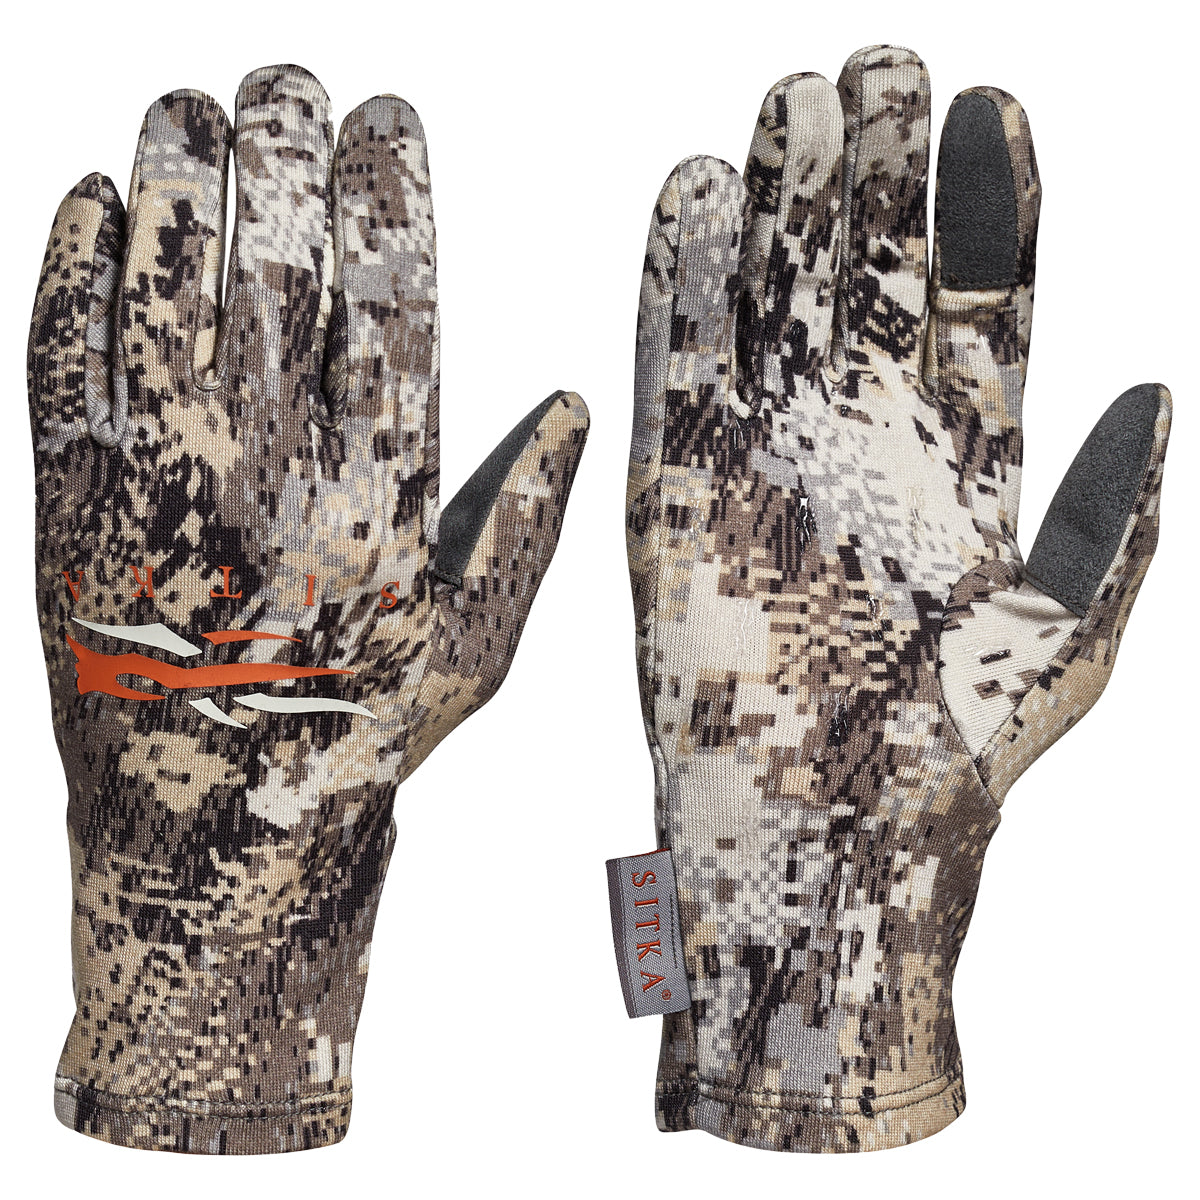 Sitka Merino 330 Glove in  by GOHUNT | Sitka - GOHUNT Shop